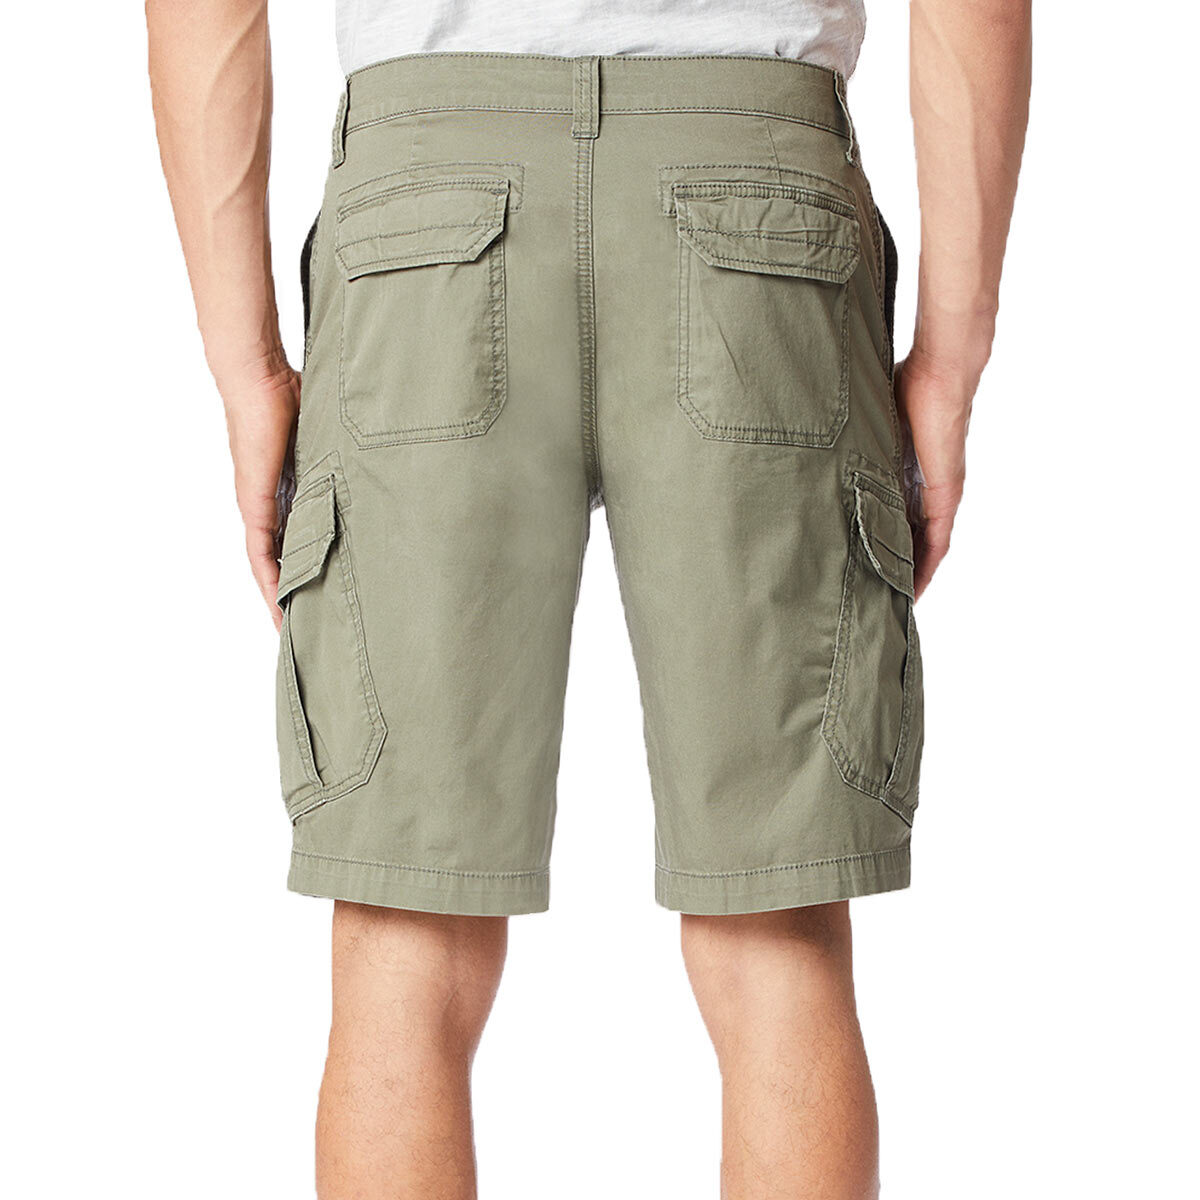 Union Bay Dexter Cargo Men's Shorts in Olive